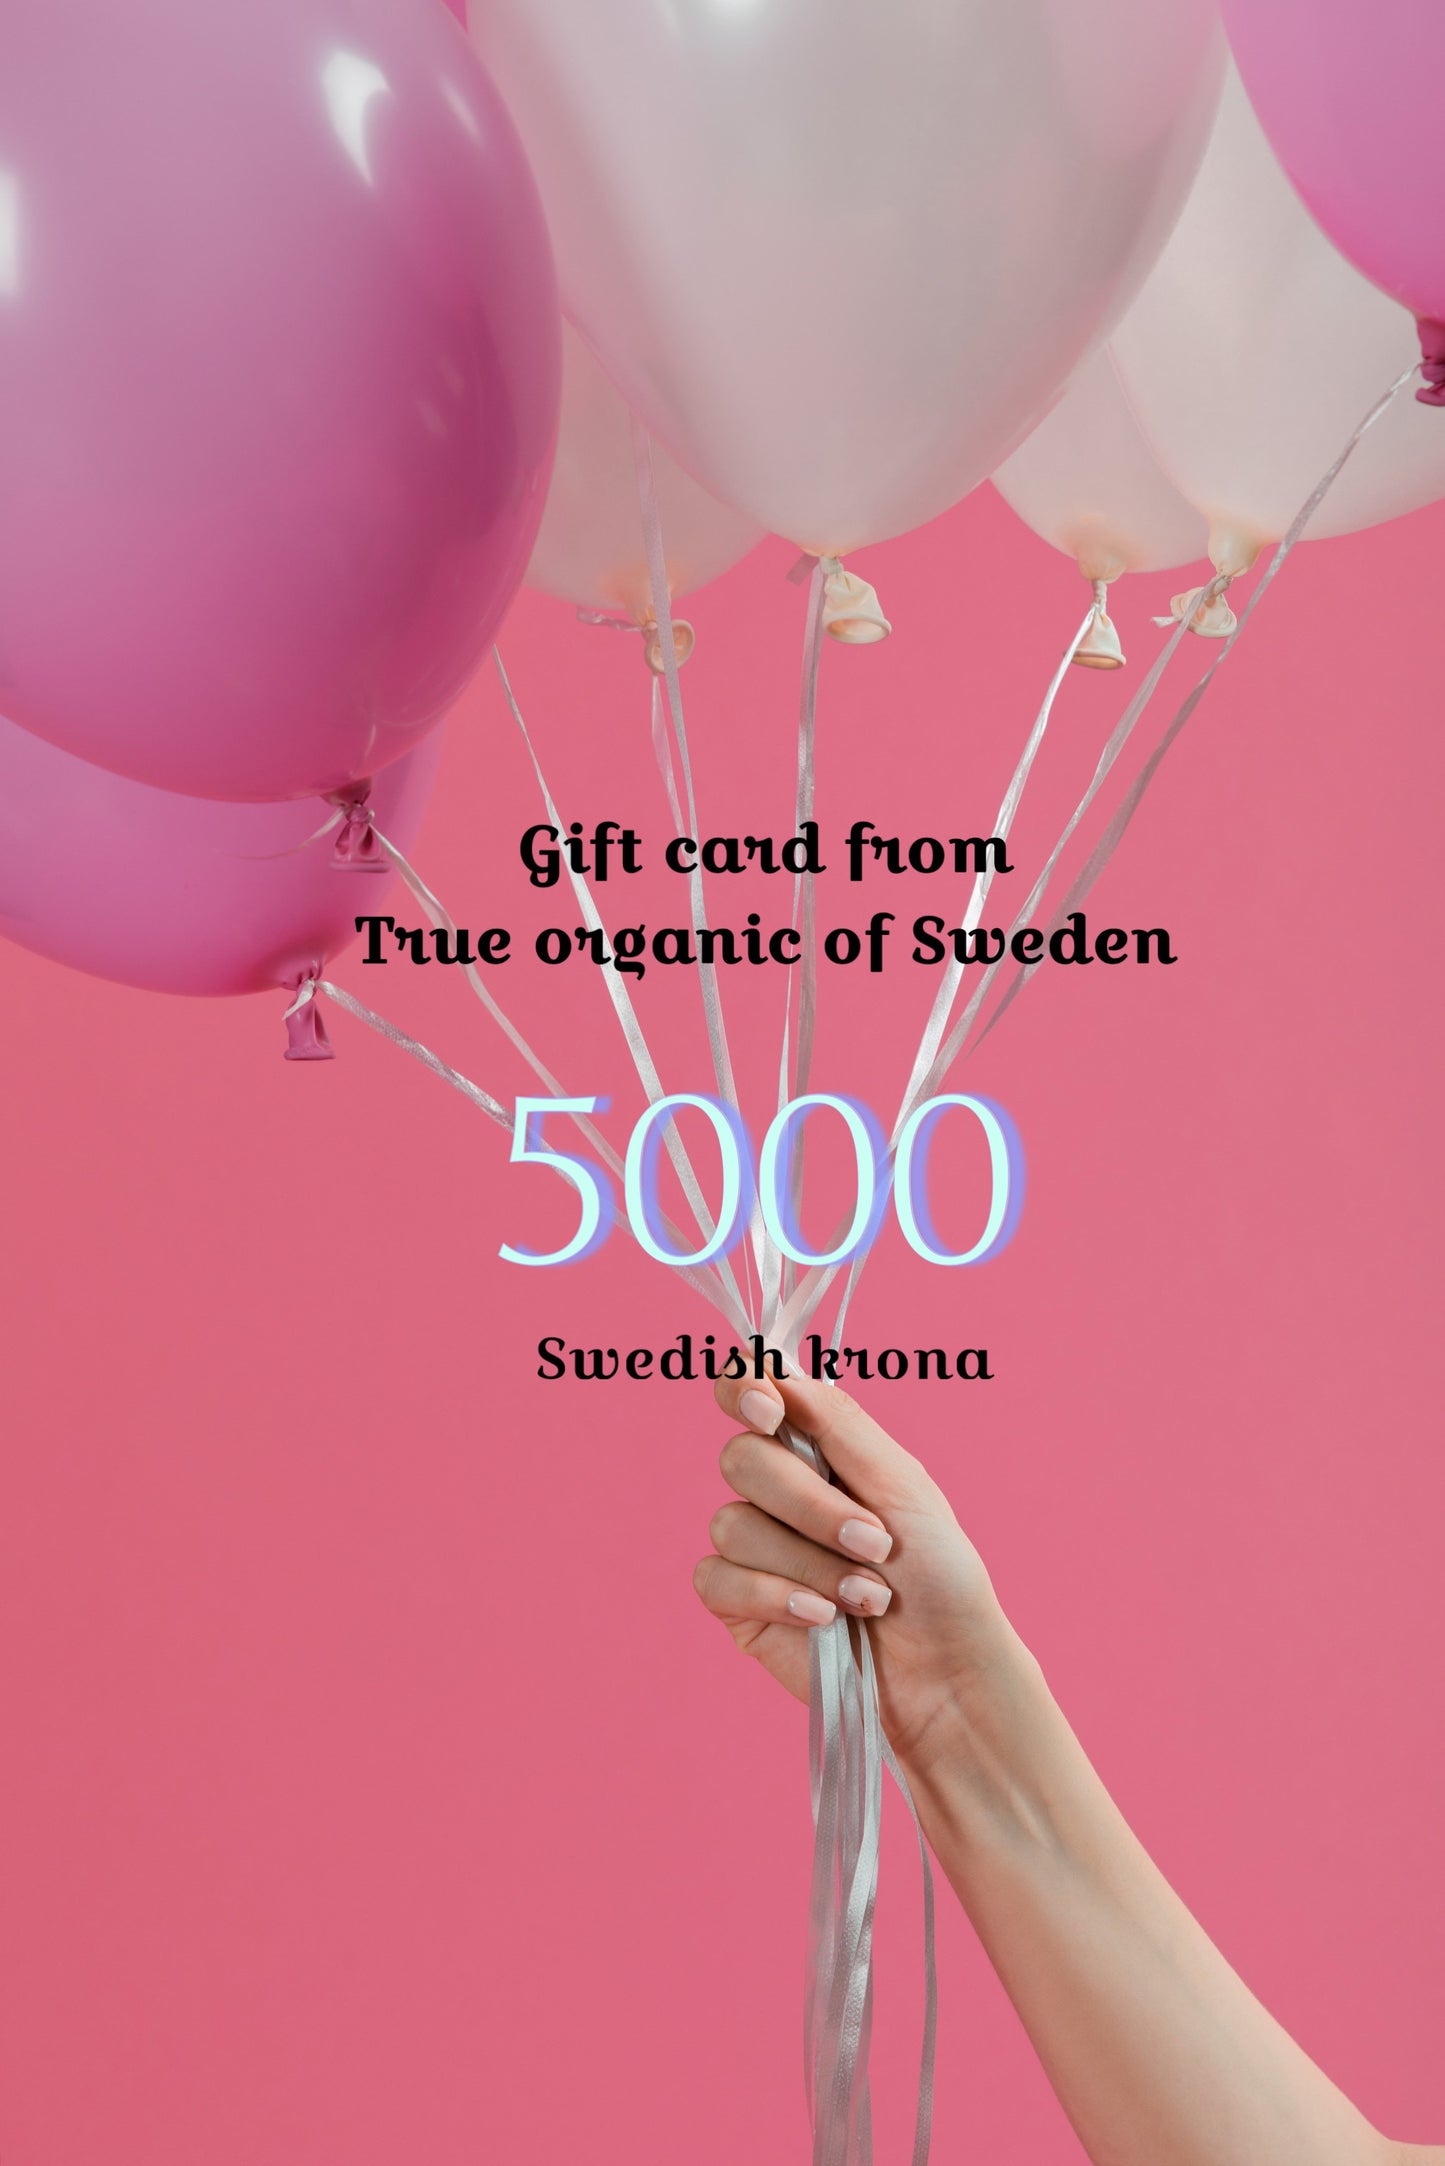 Gift card from True organic of Sweden 5000 krona 